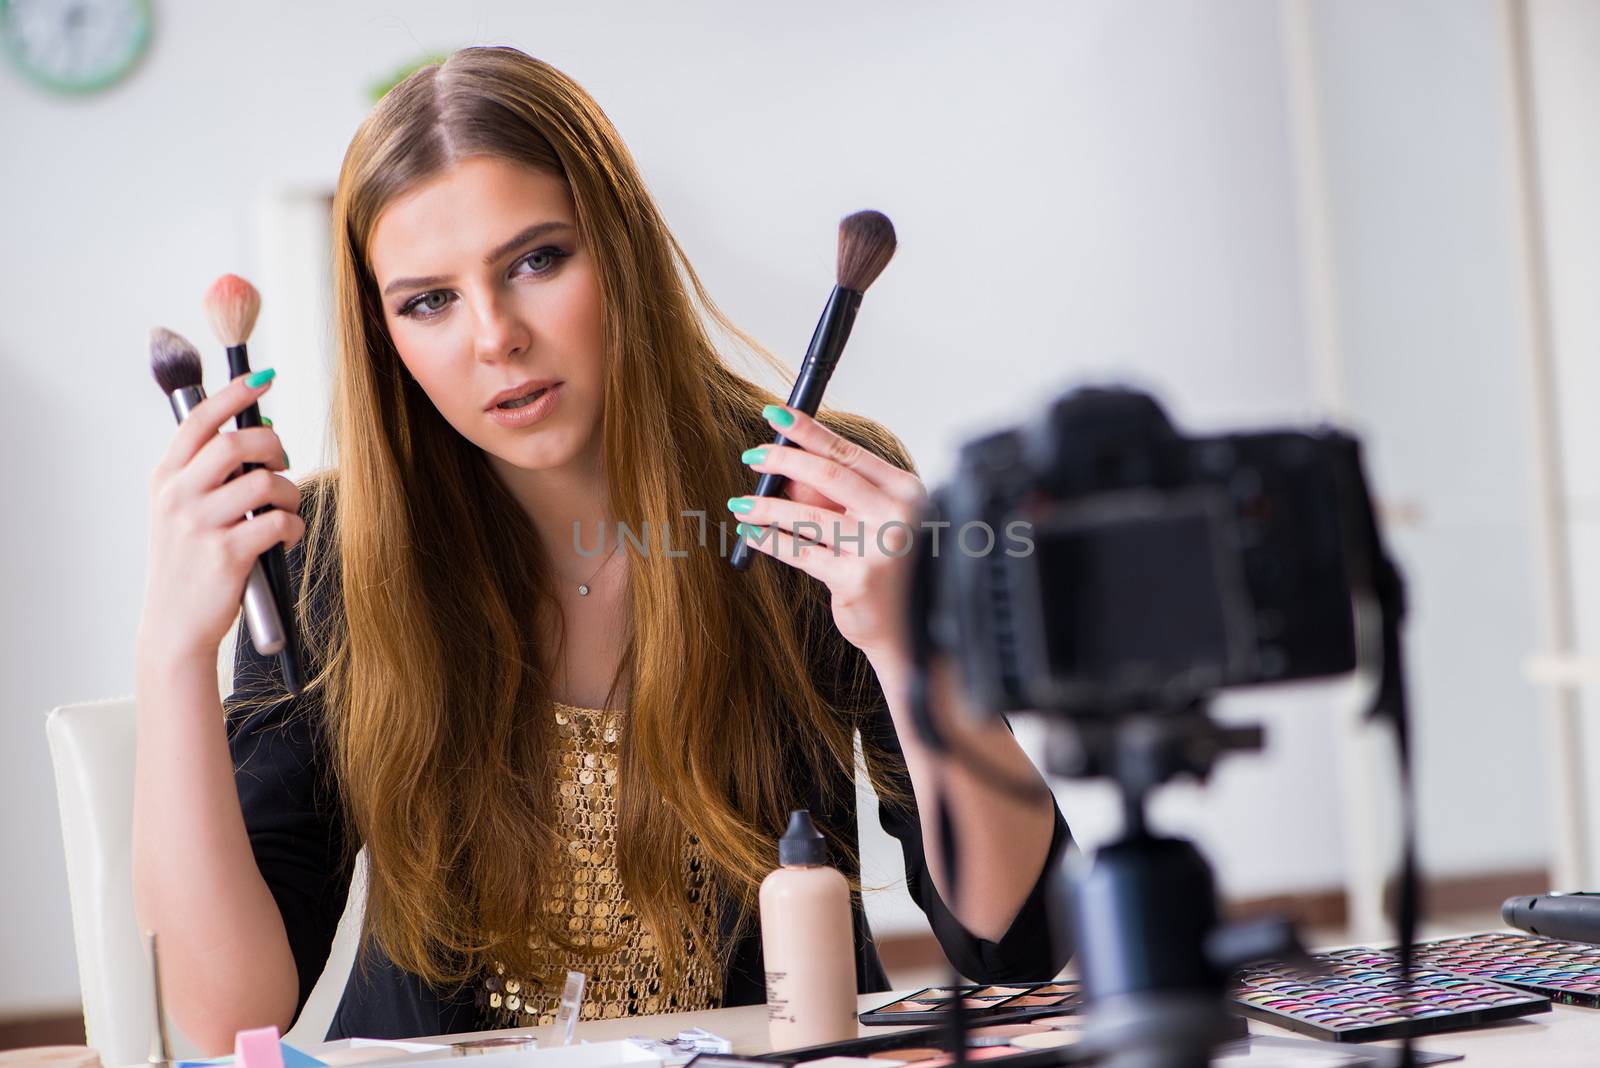 Beauty blogger filing video for her blog or vlog by Elnur